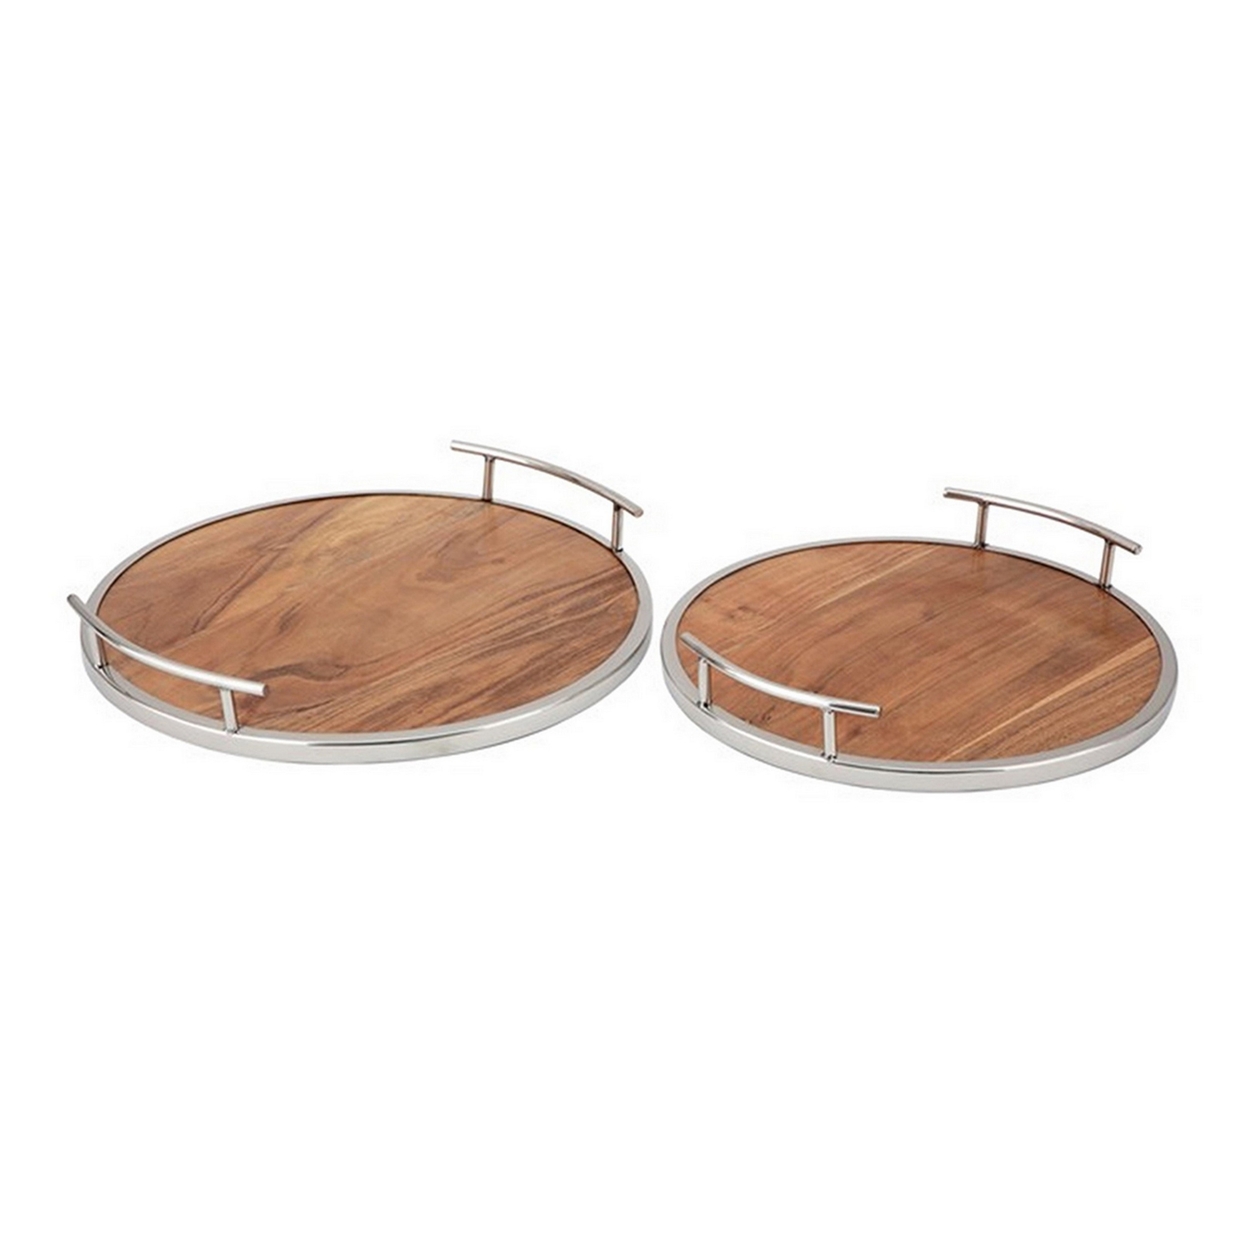 Set Of 2 Round Decorative Trays, Stainless Steel, Mango Wood Surfaces - Saltoro Sherpi